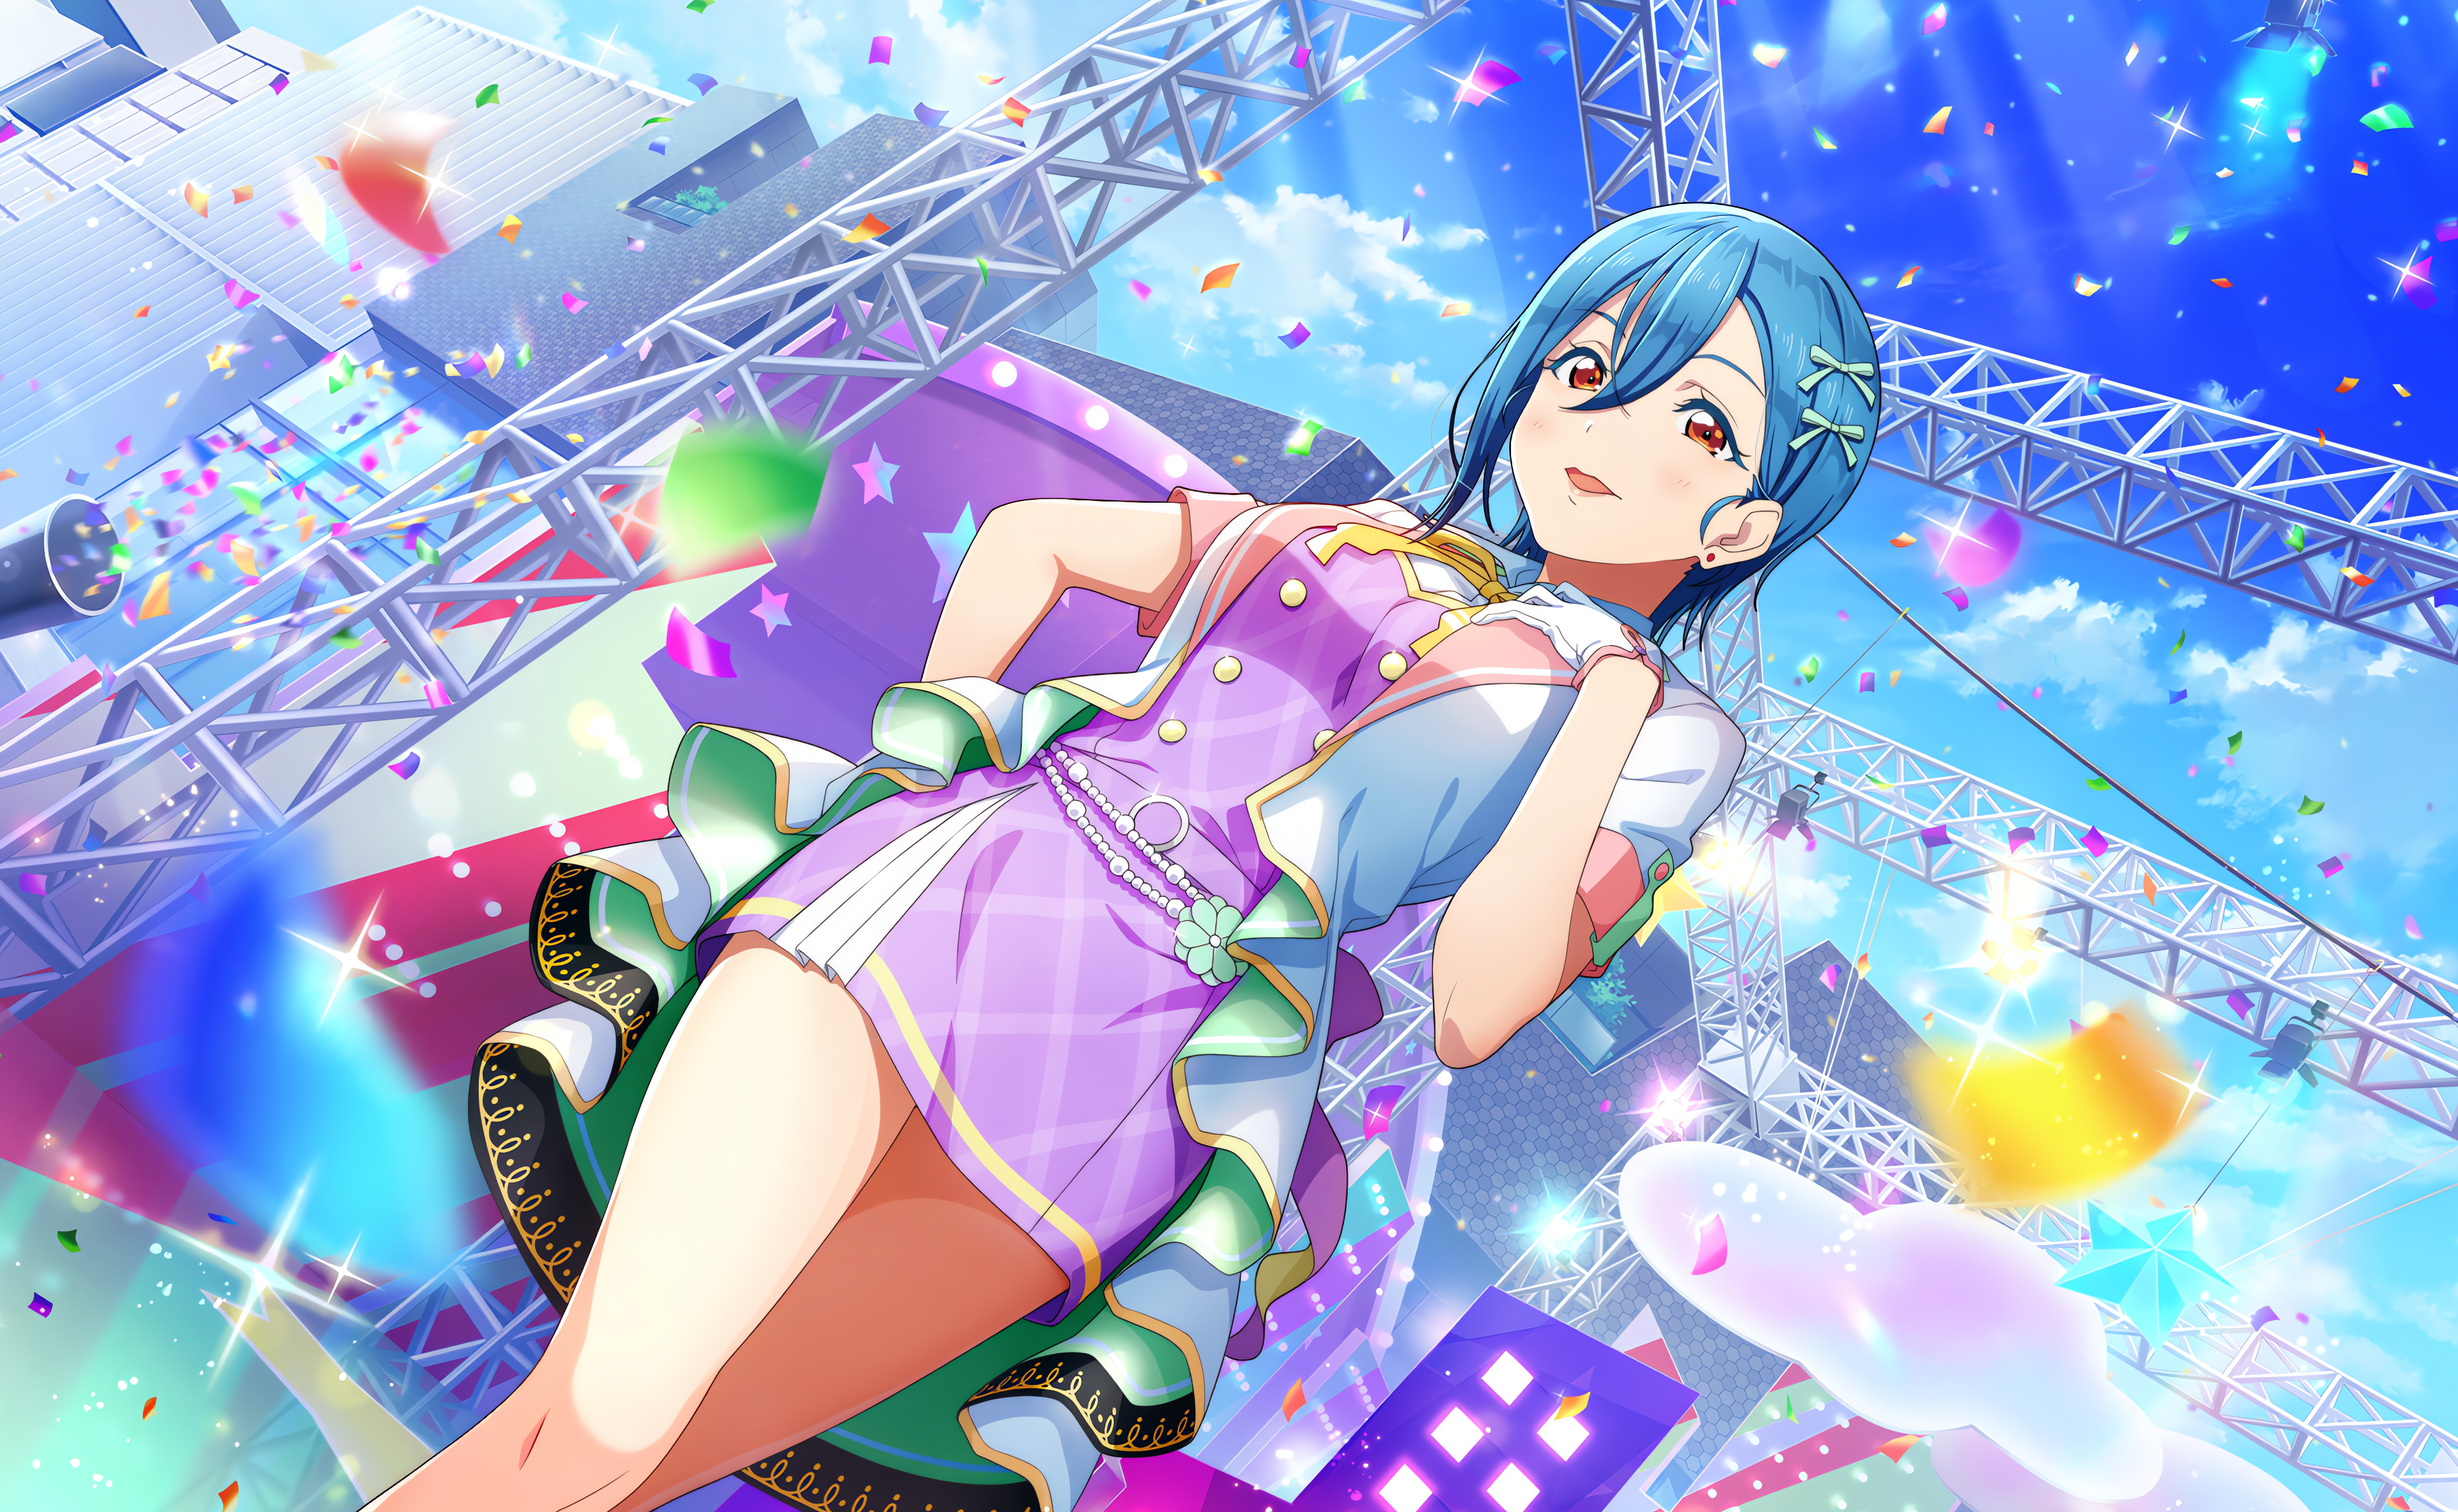 Love Live Super Star Love Live Anime Girls Anime Sky Clouds Confetti Stars Stages Gloves Dress Blush 4096x2520